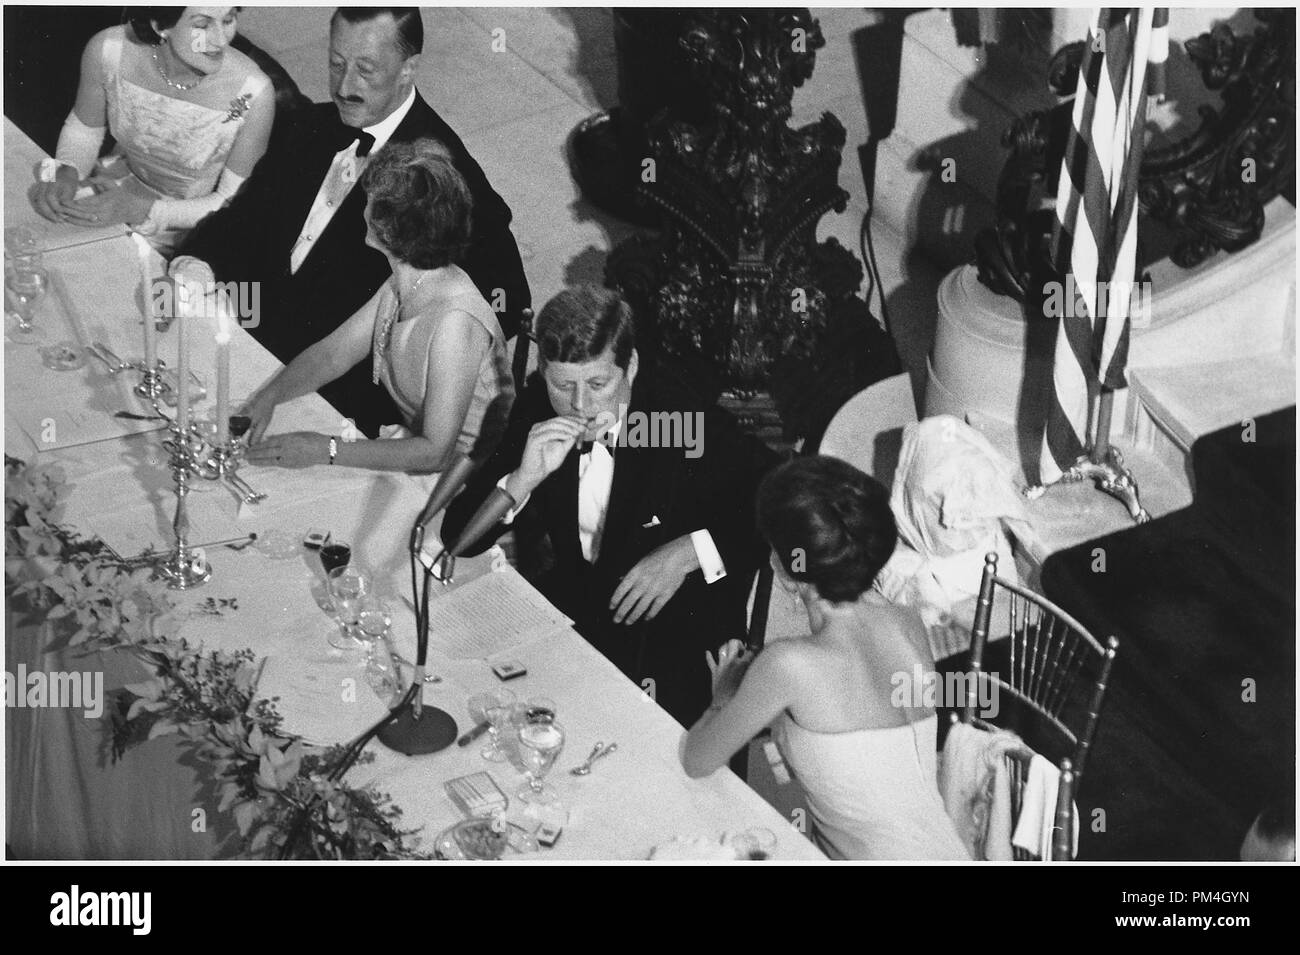 America's Cup Abendessen. Präsident Kennedy, Frau Kennedy, andere. Newport, RI, "The Breakers". 14. September 1962 Datei Referenz Nr. 1003 151 THA Stockfoto